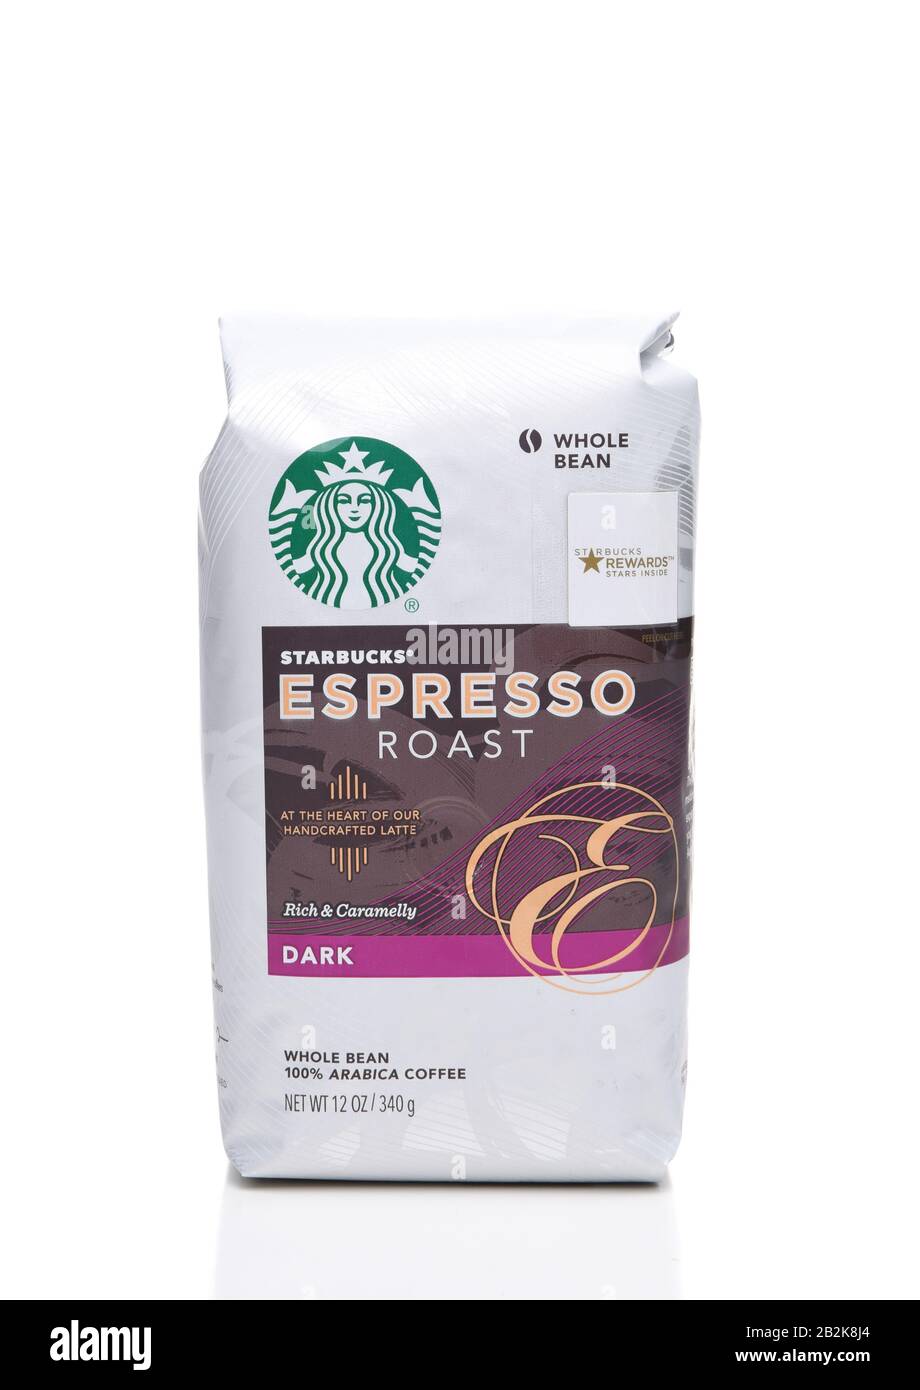 starbucks coffee bag design